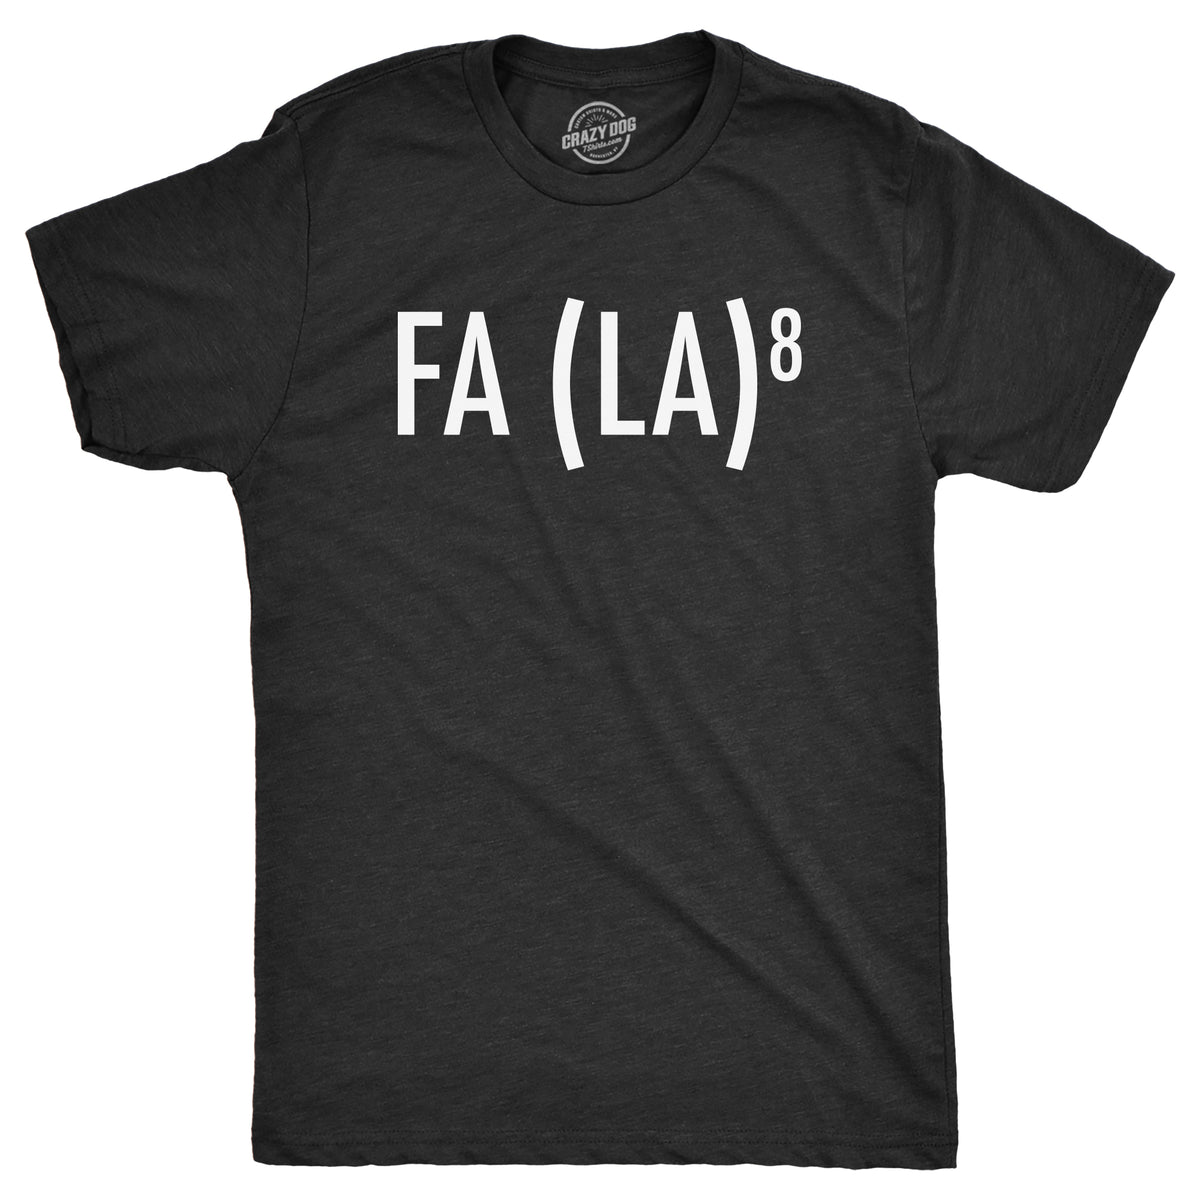 Funny Heather Black - Fa La Fa (La)8 Mens T Shirt Nerdy Christmas Science Tee